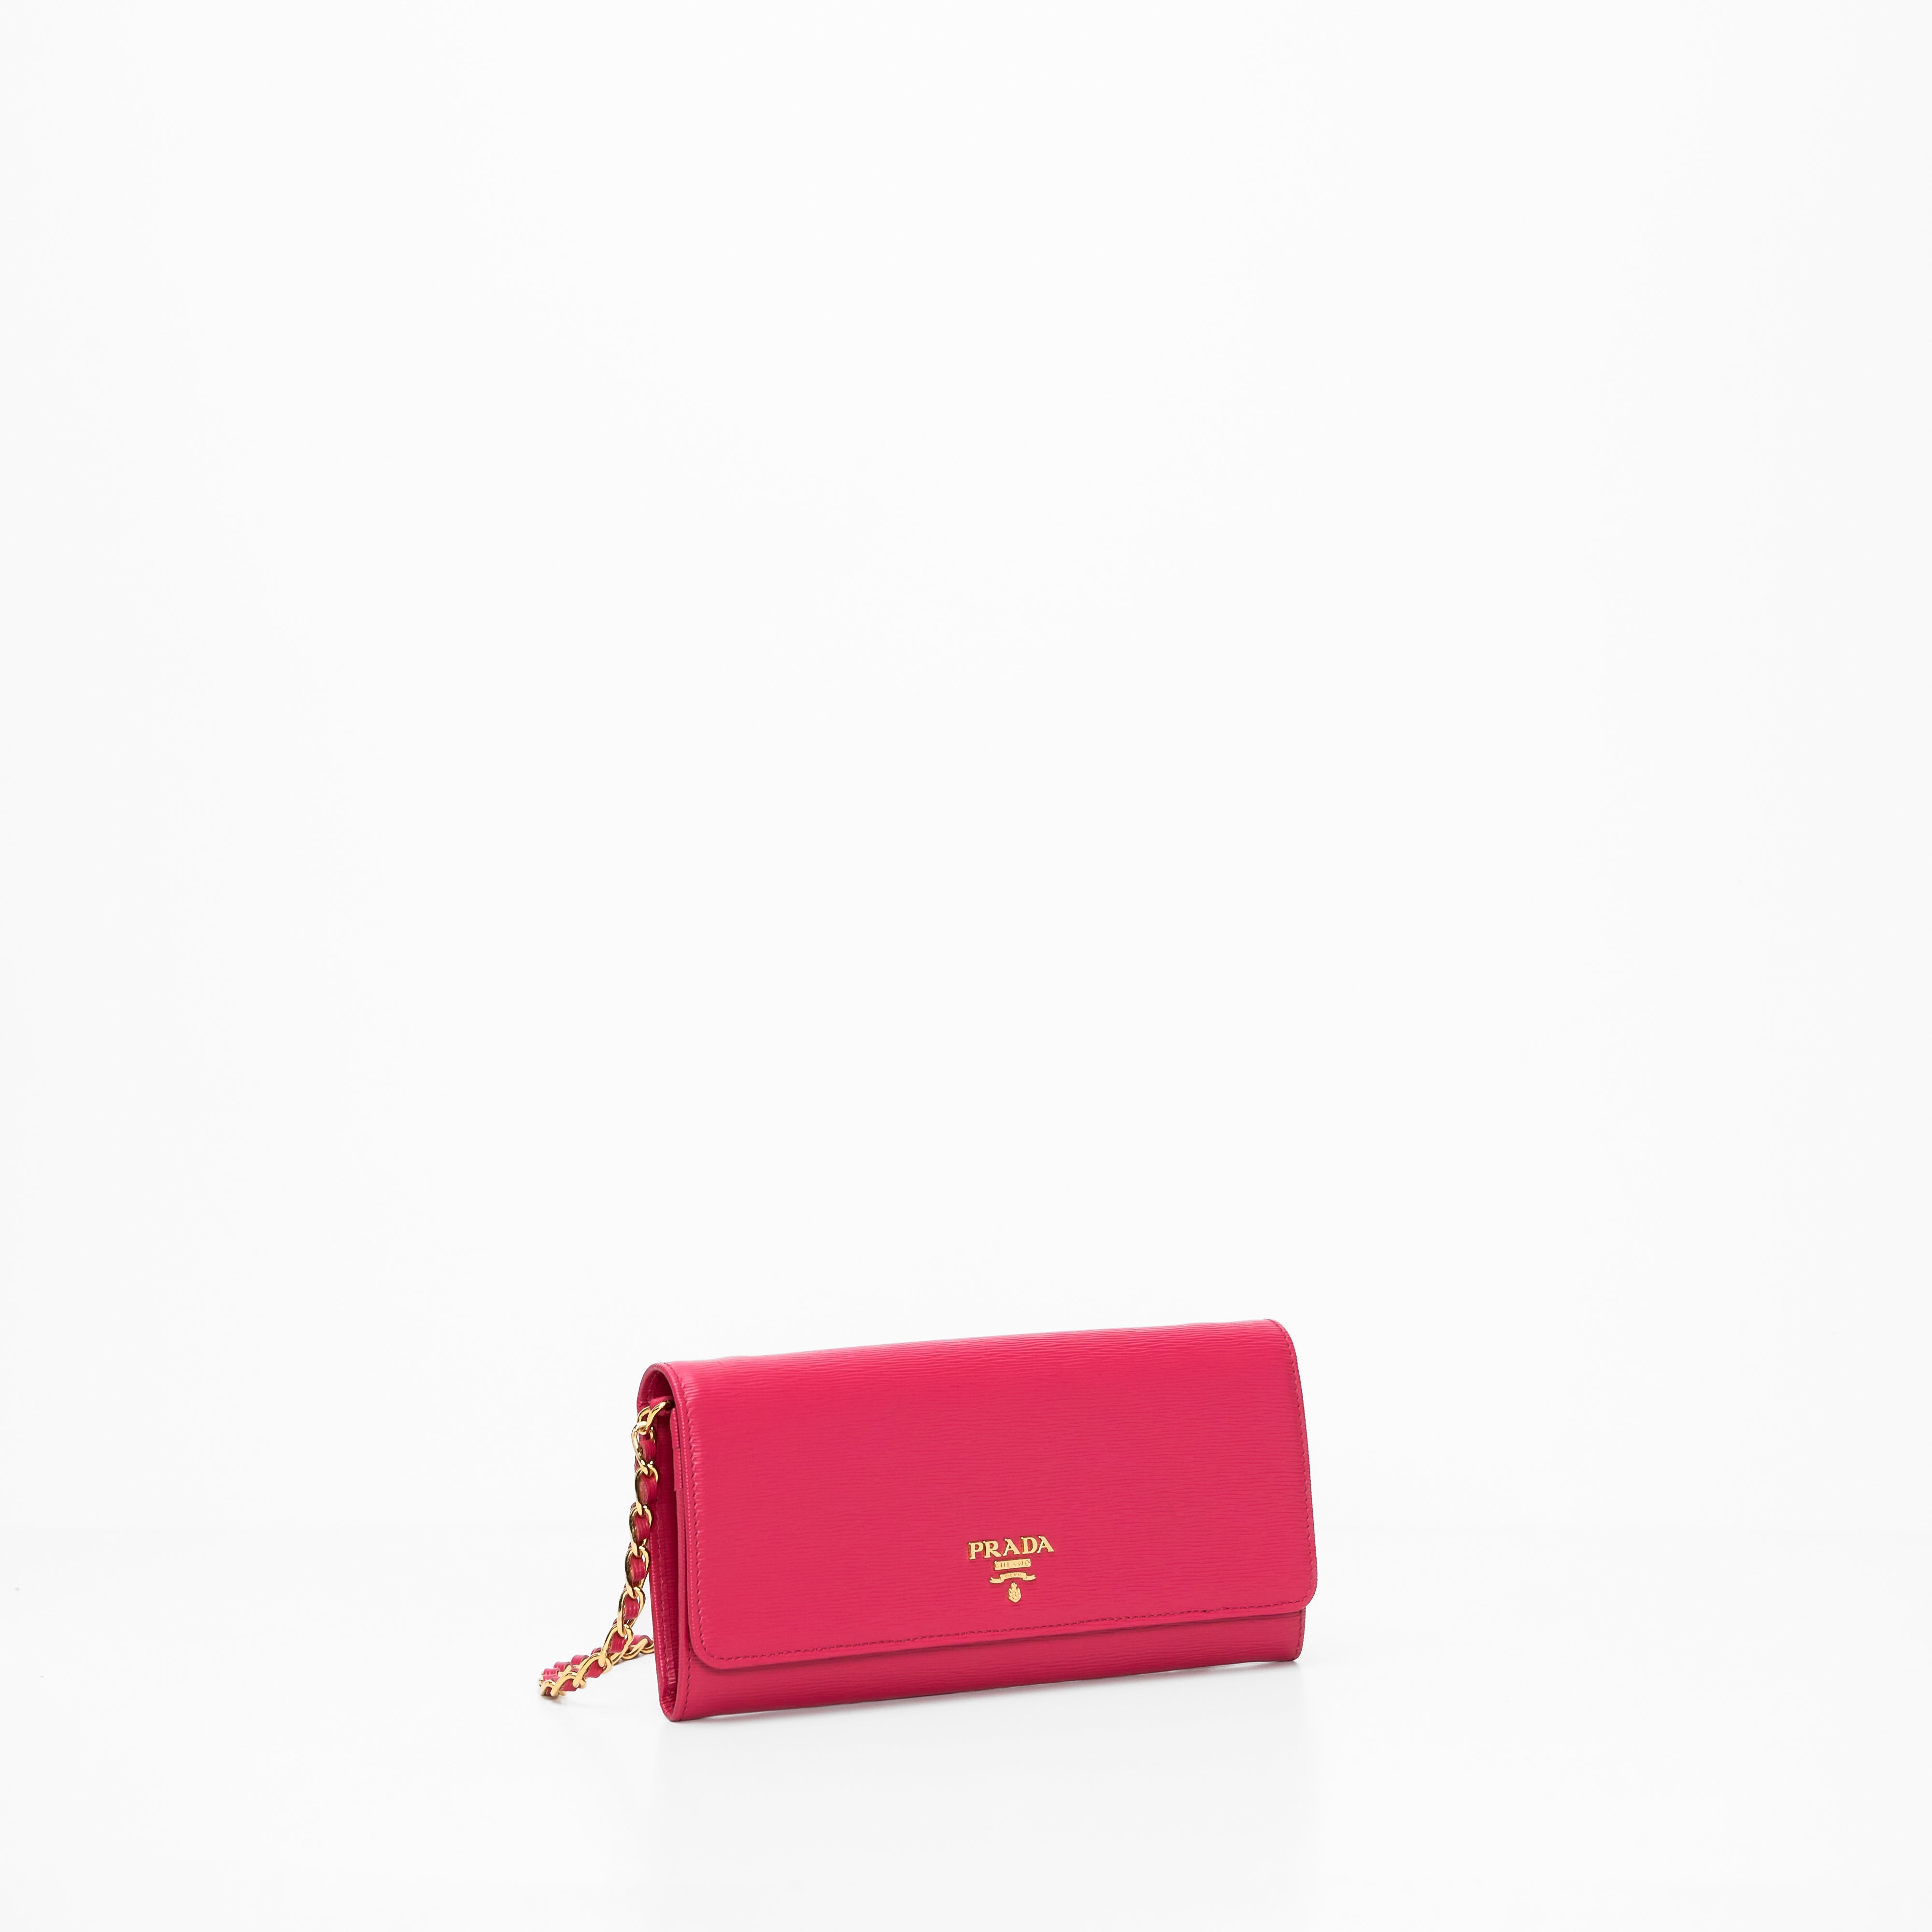 prada saffiano pink leather flap wallet